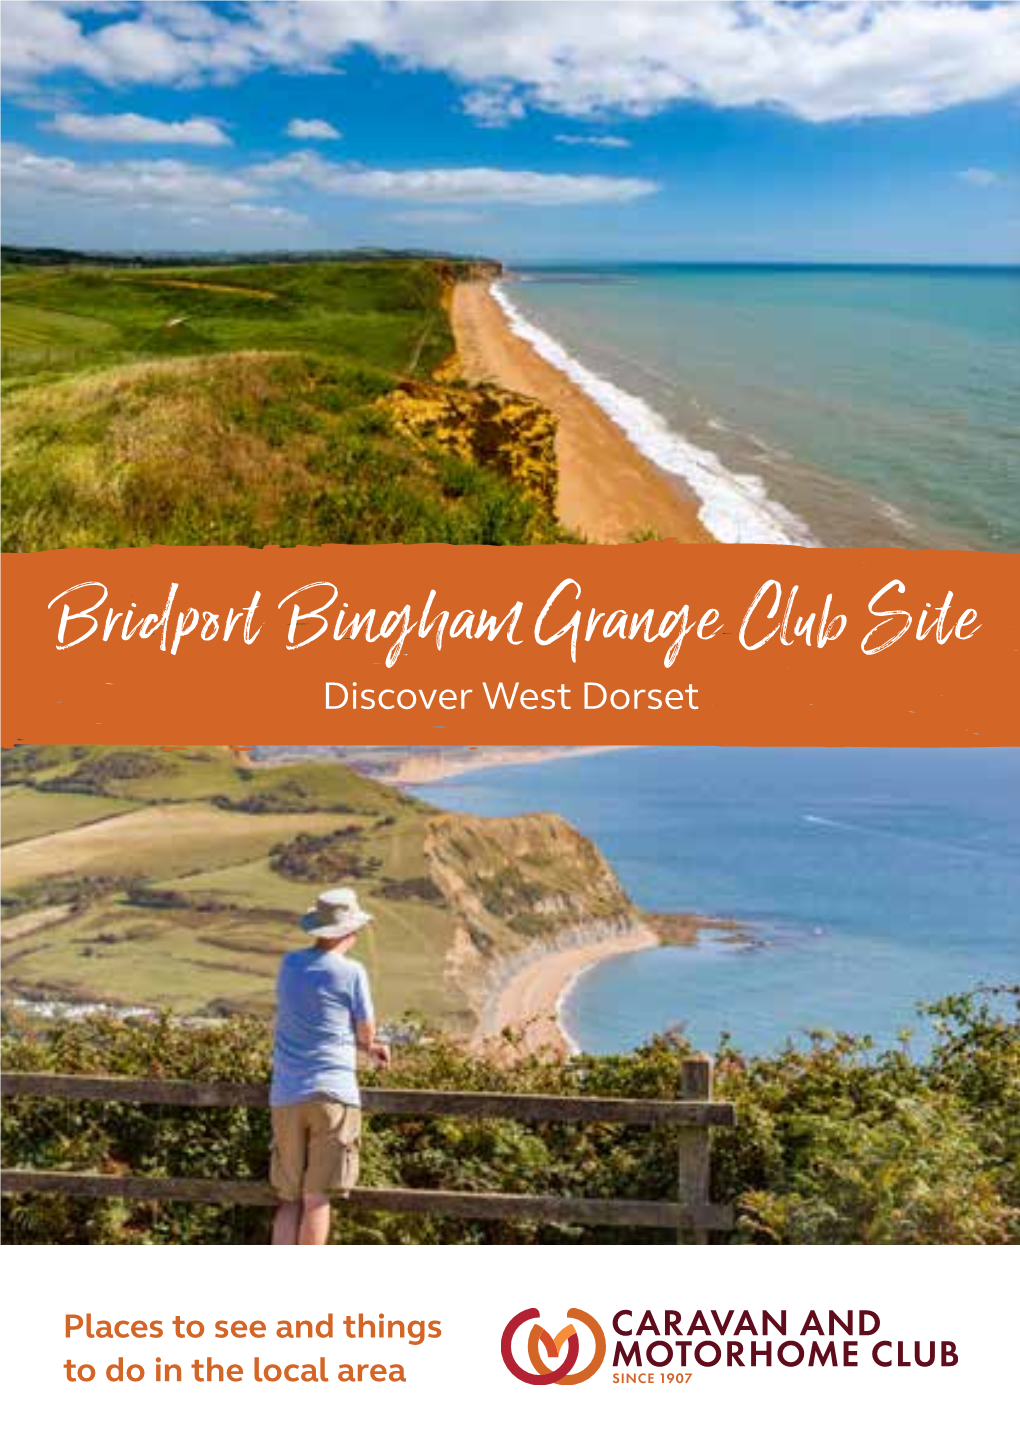 Bridport Bingham Grange Club Site Discover West Dorset